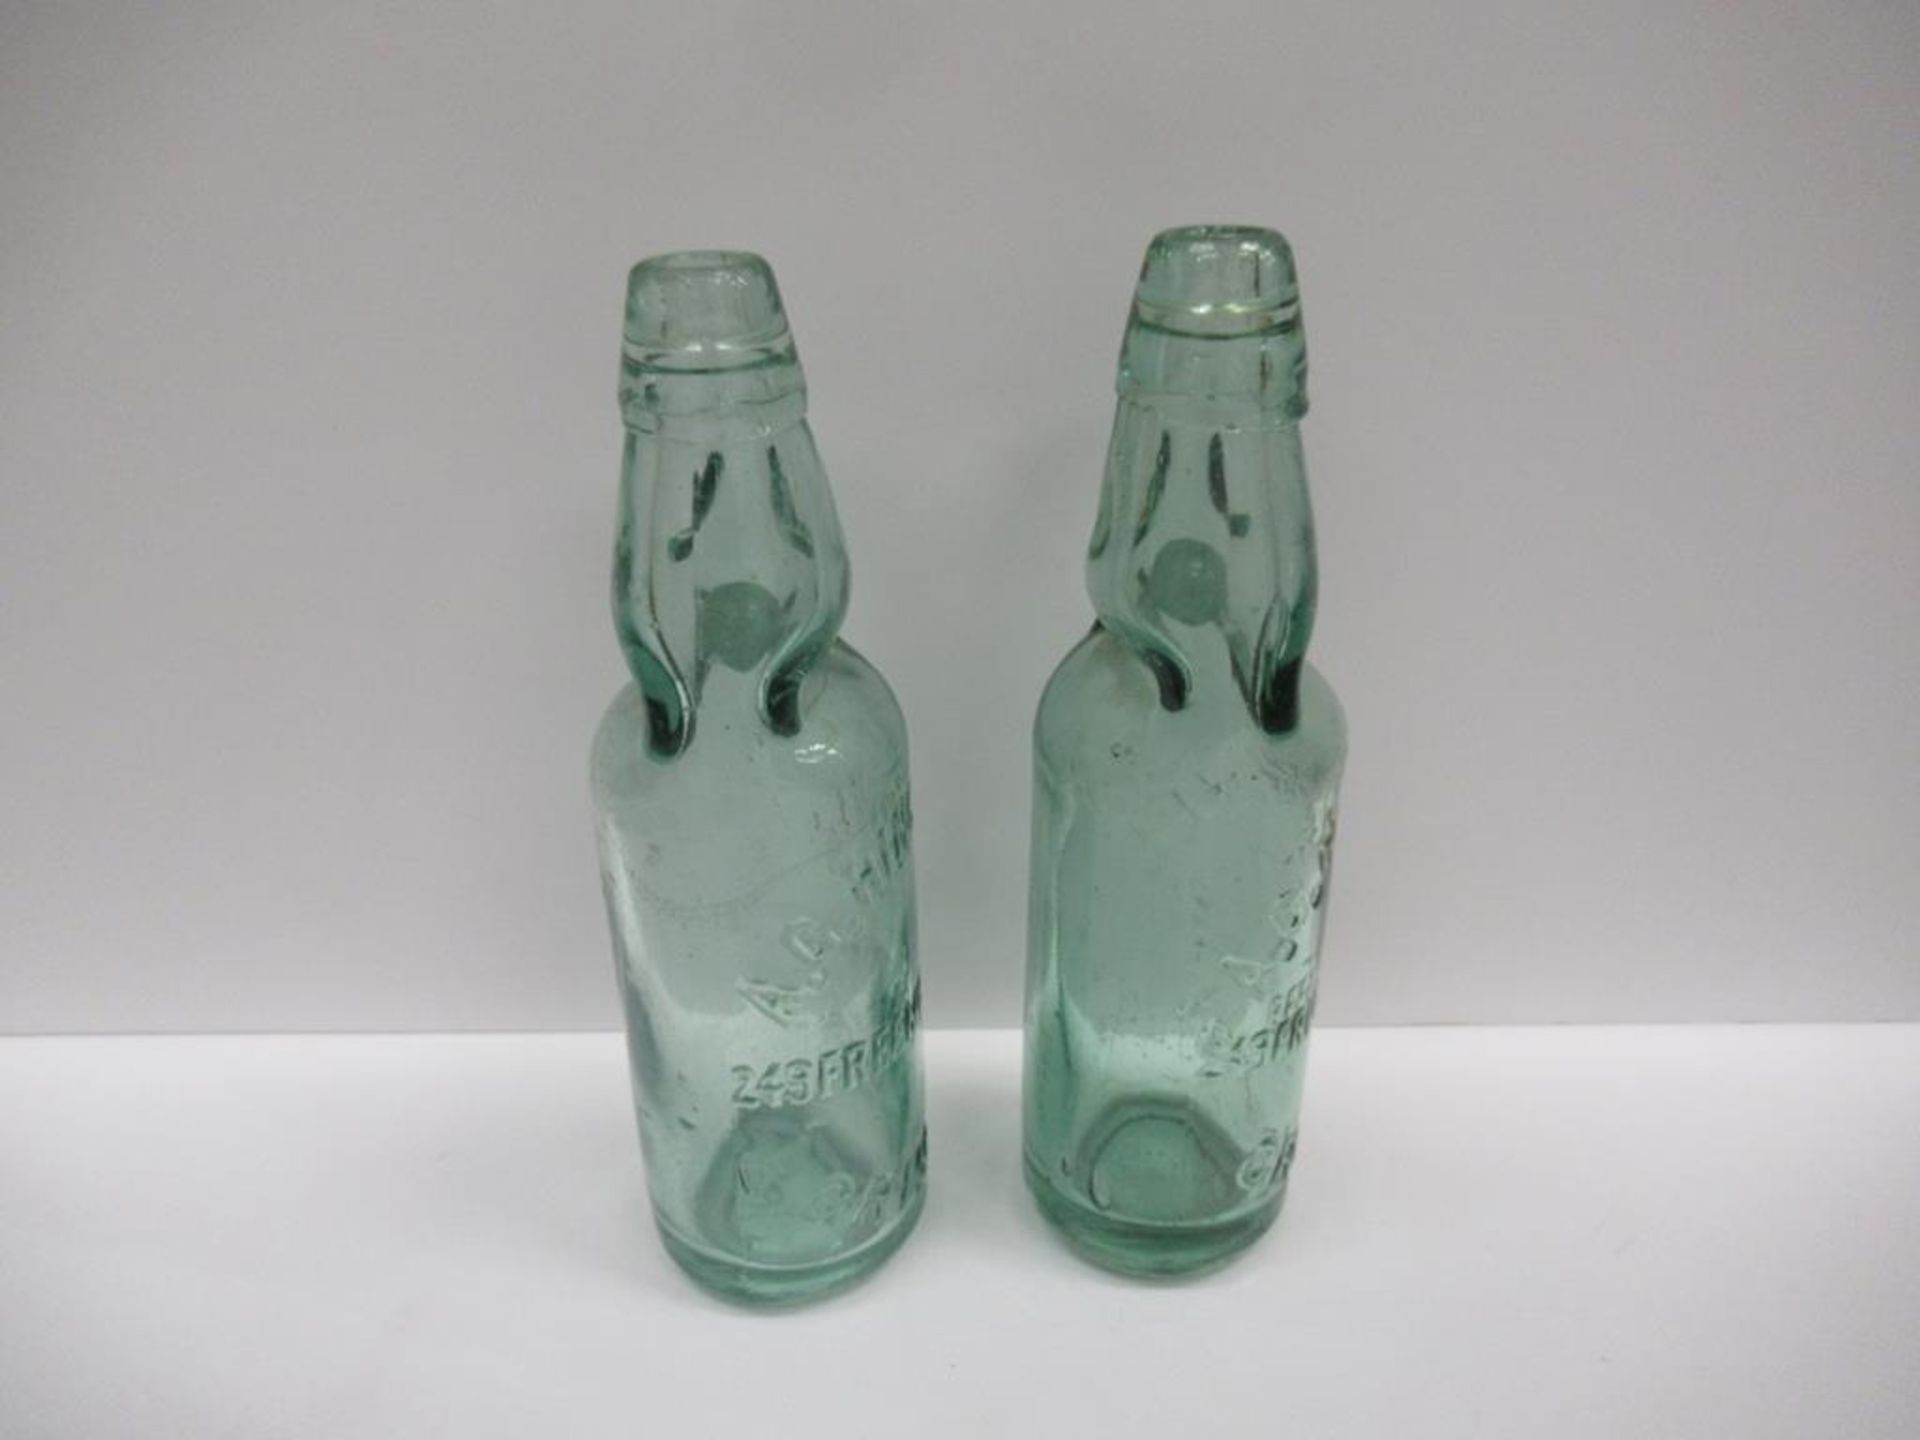 2x Grimsby A.G. Hinchliffe codd bottles (10oz) - Image 2 of 8